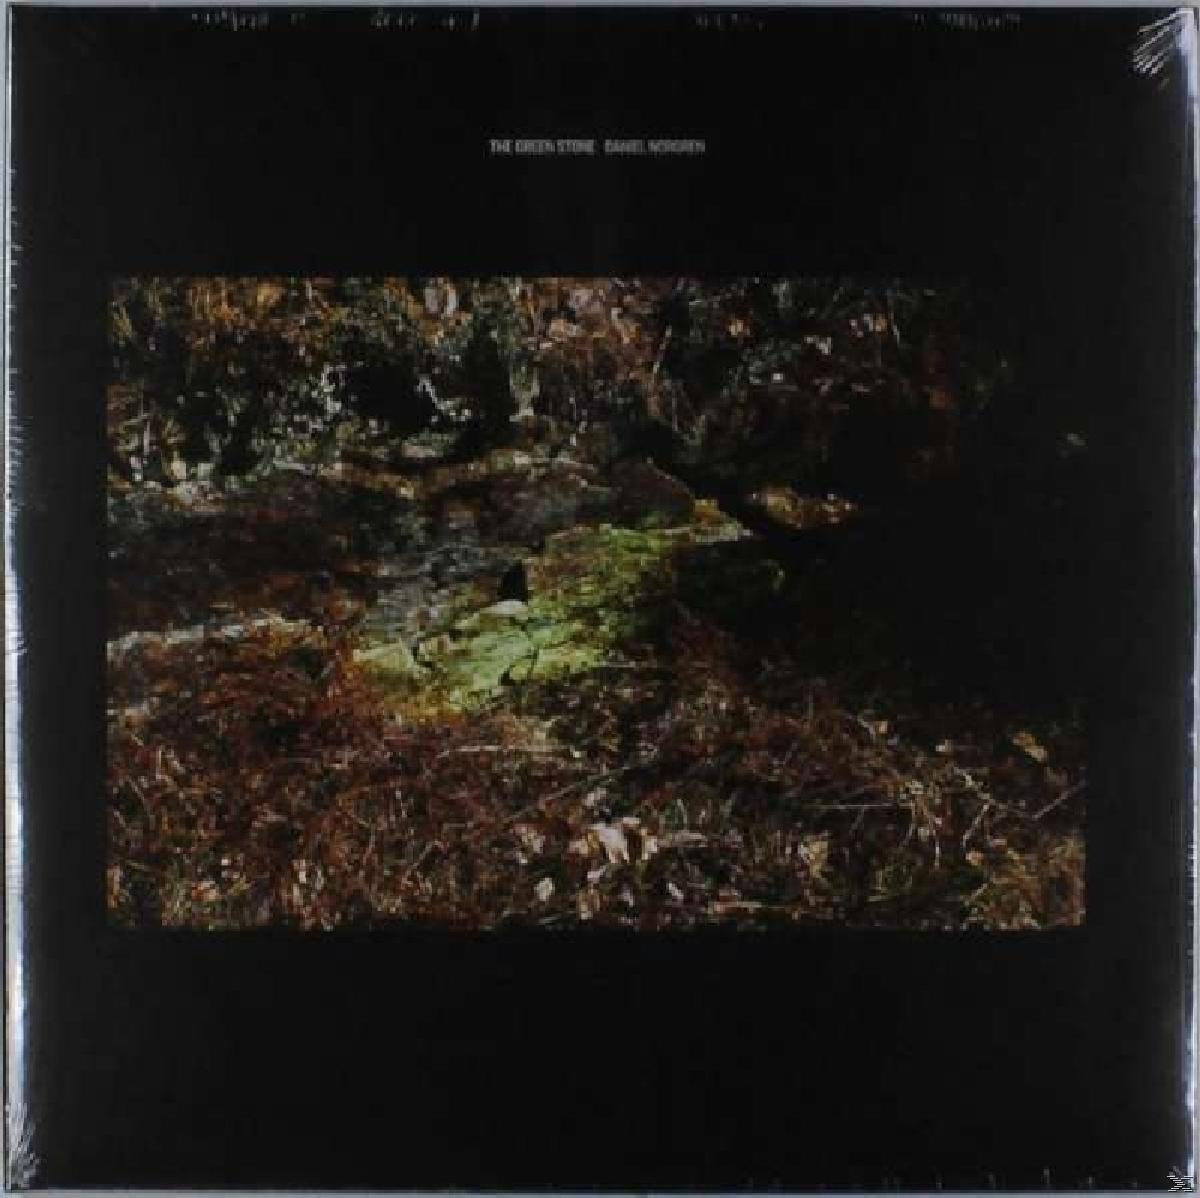 Daniel Norgren - The Green Stone - (Vinyl)